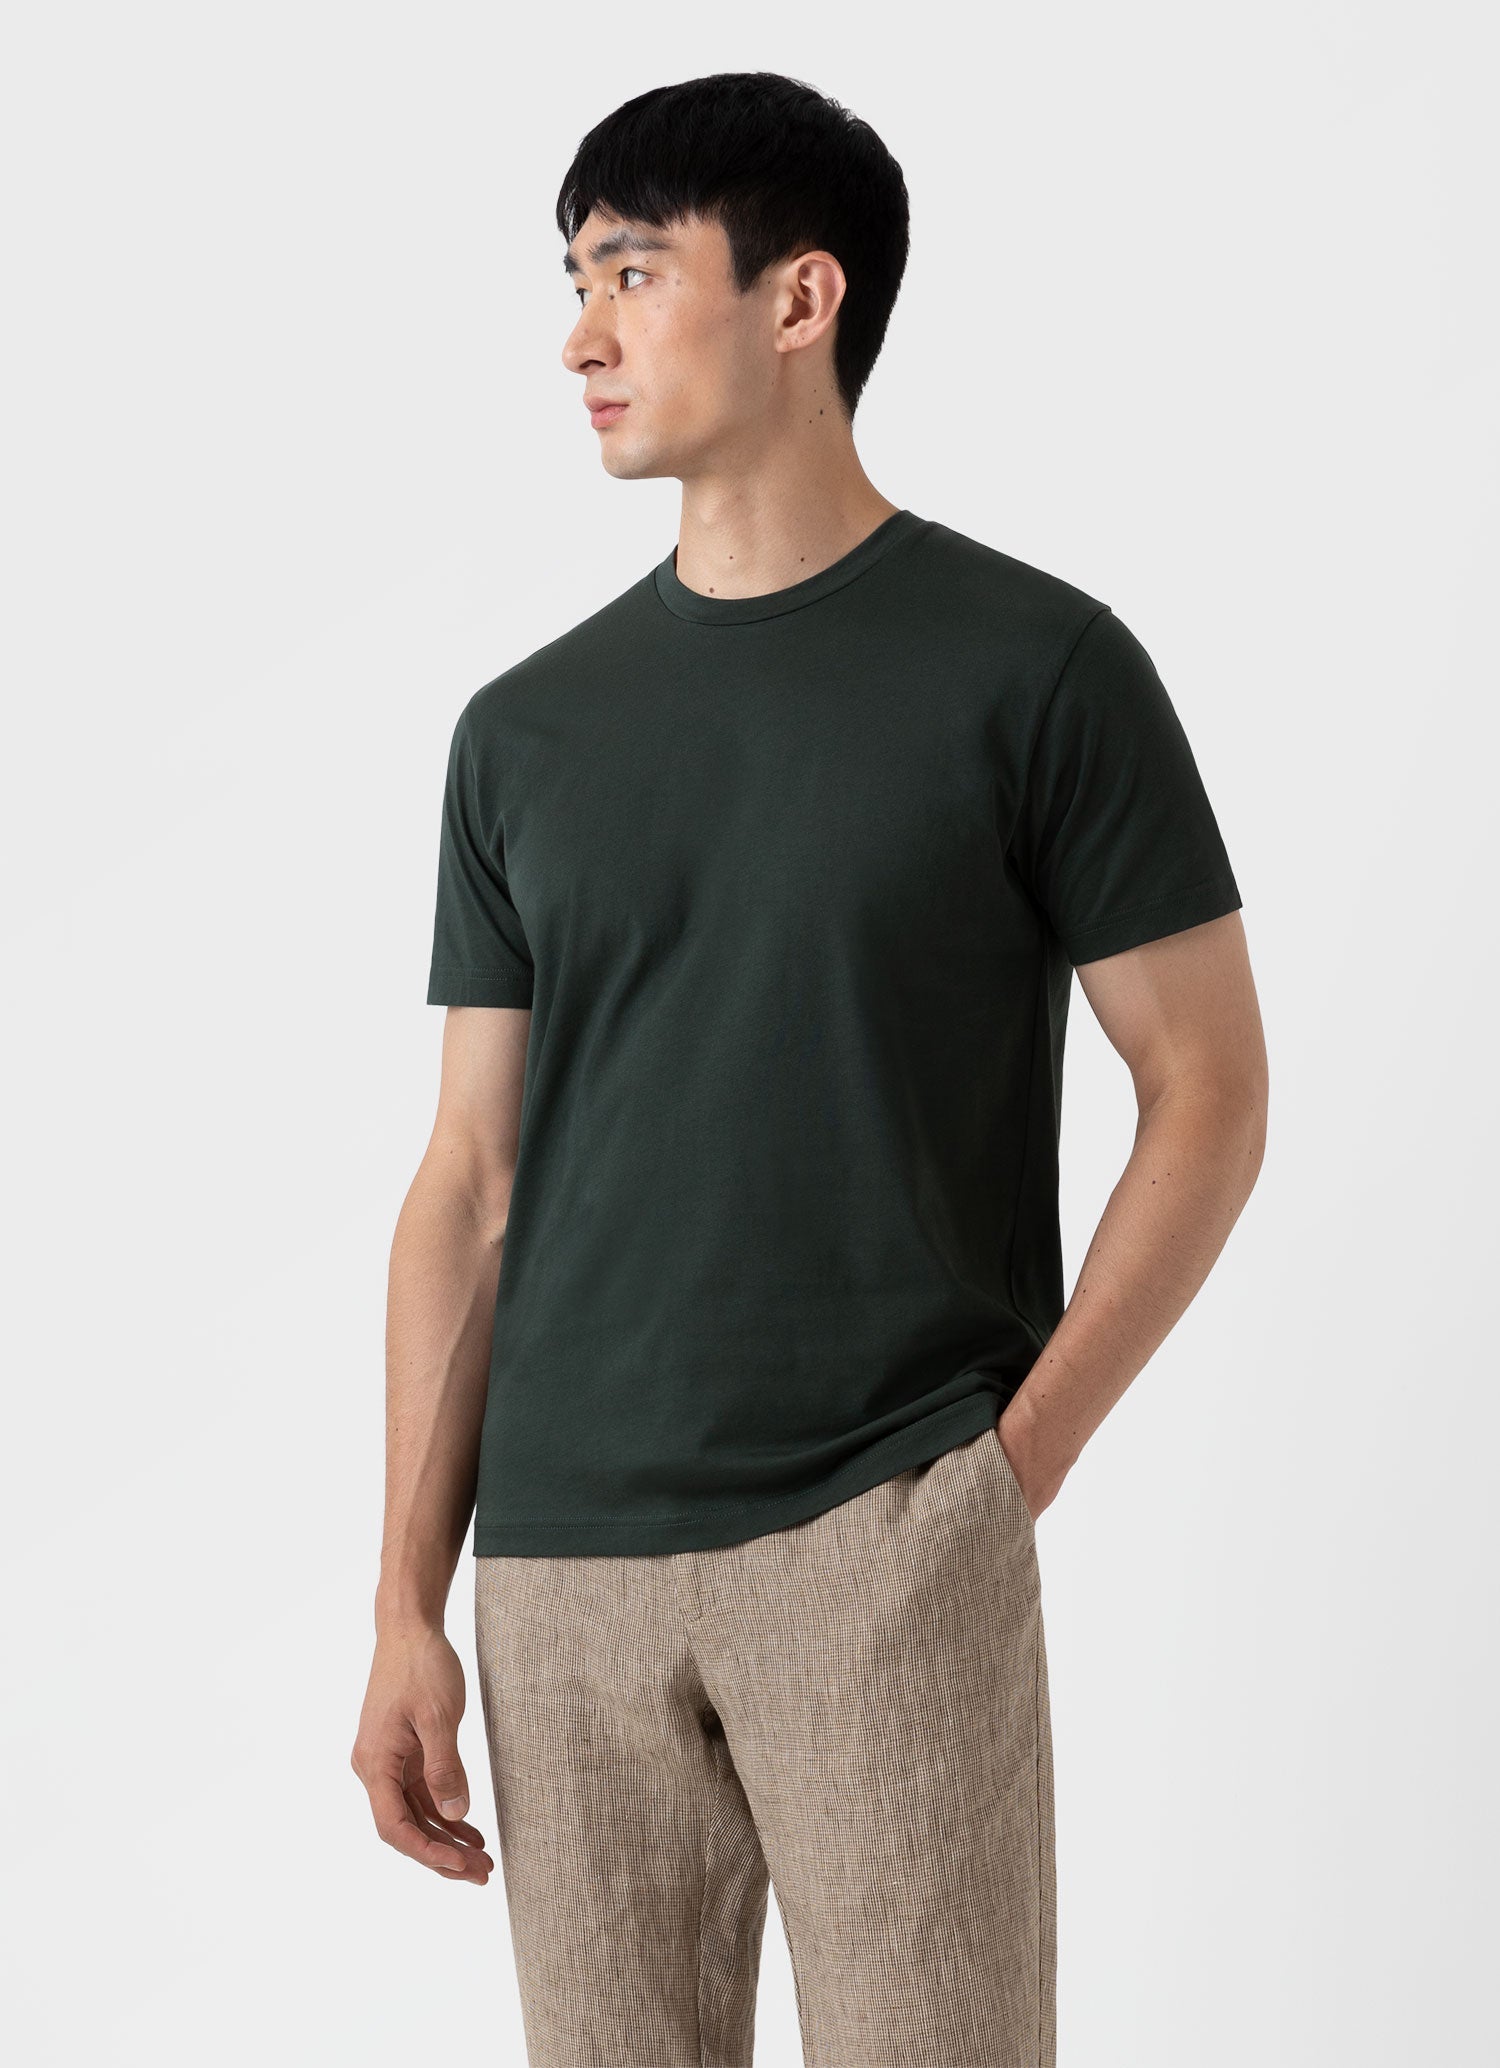 Men's Riviera T-shirt in Seaweed